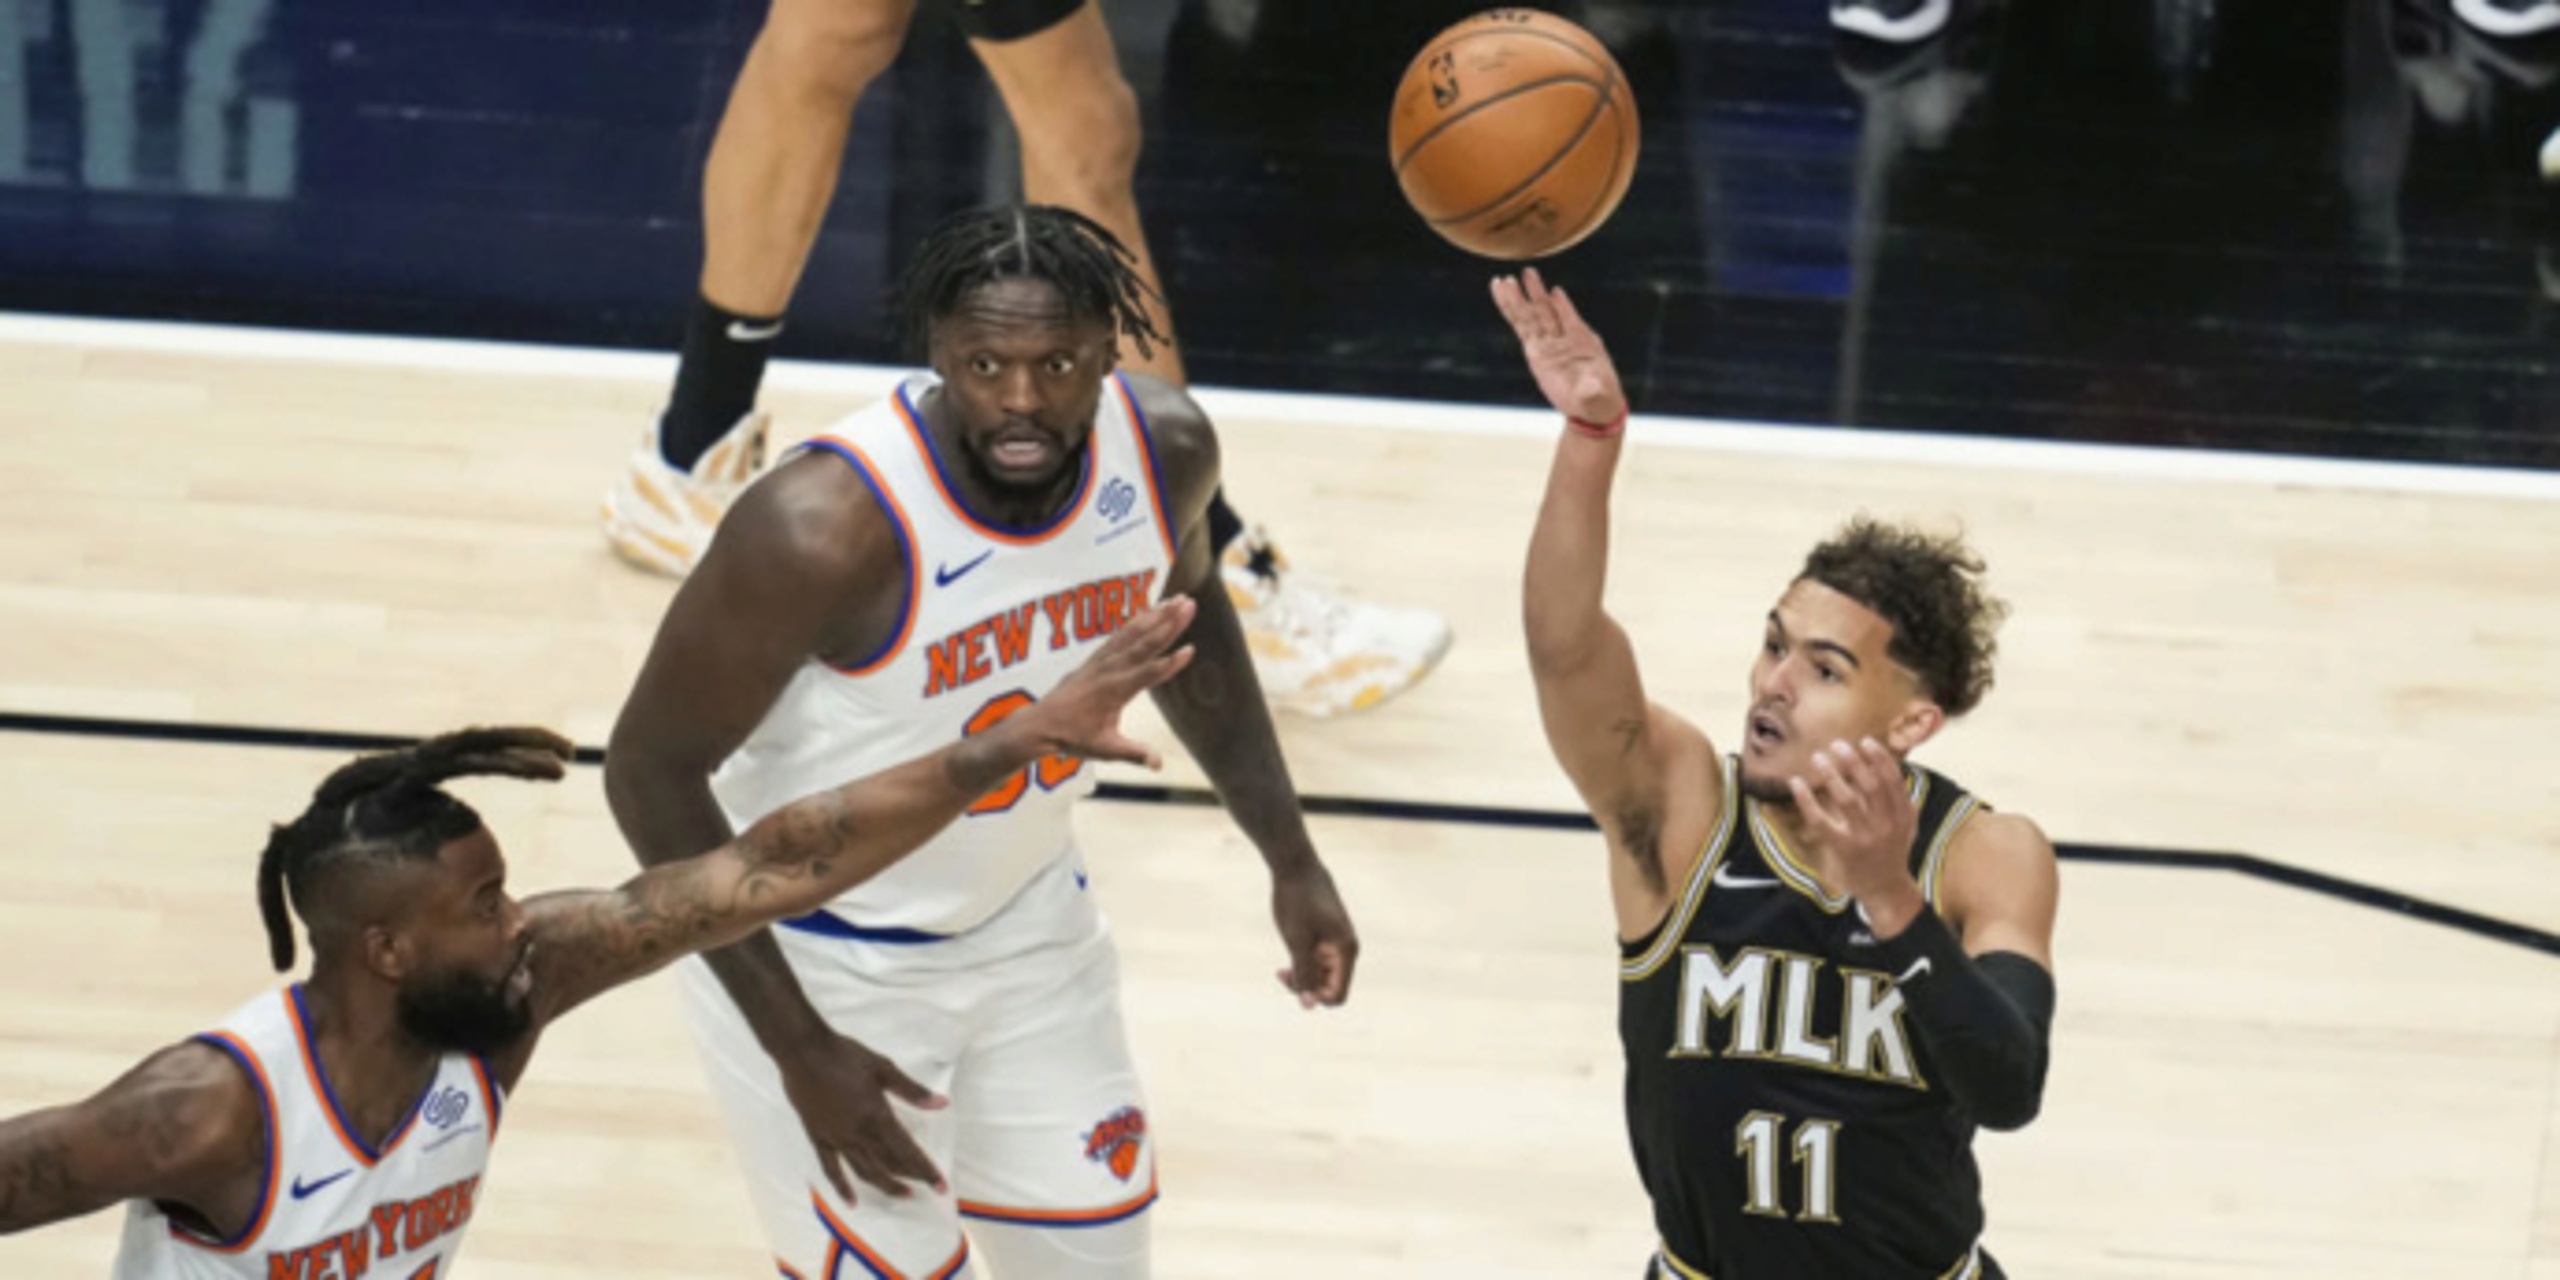 Examining adjustments the Knicks can make to save their season